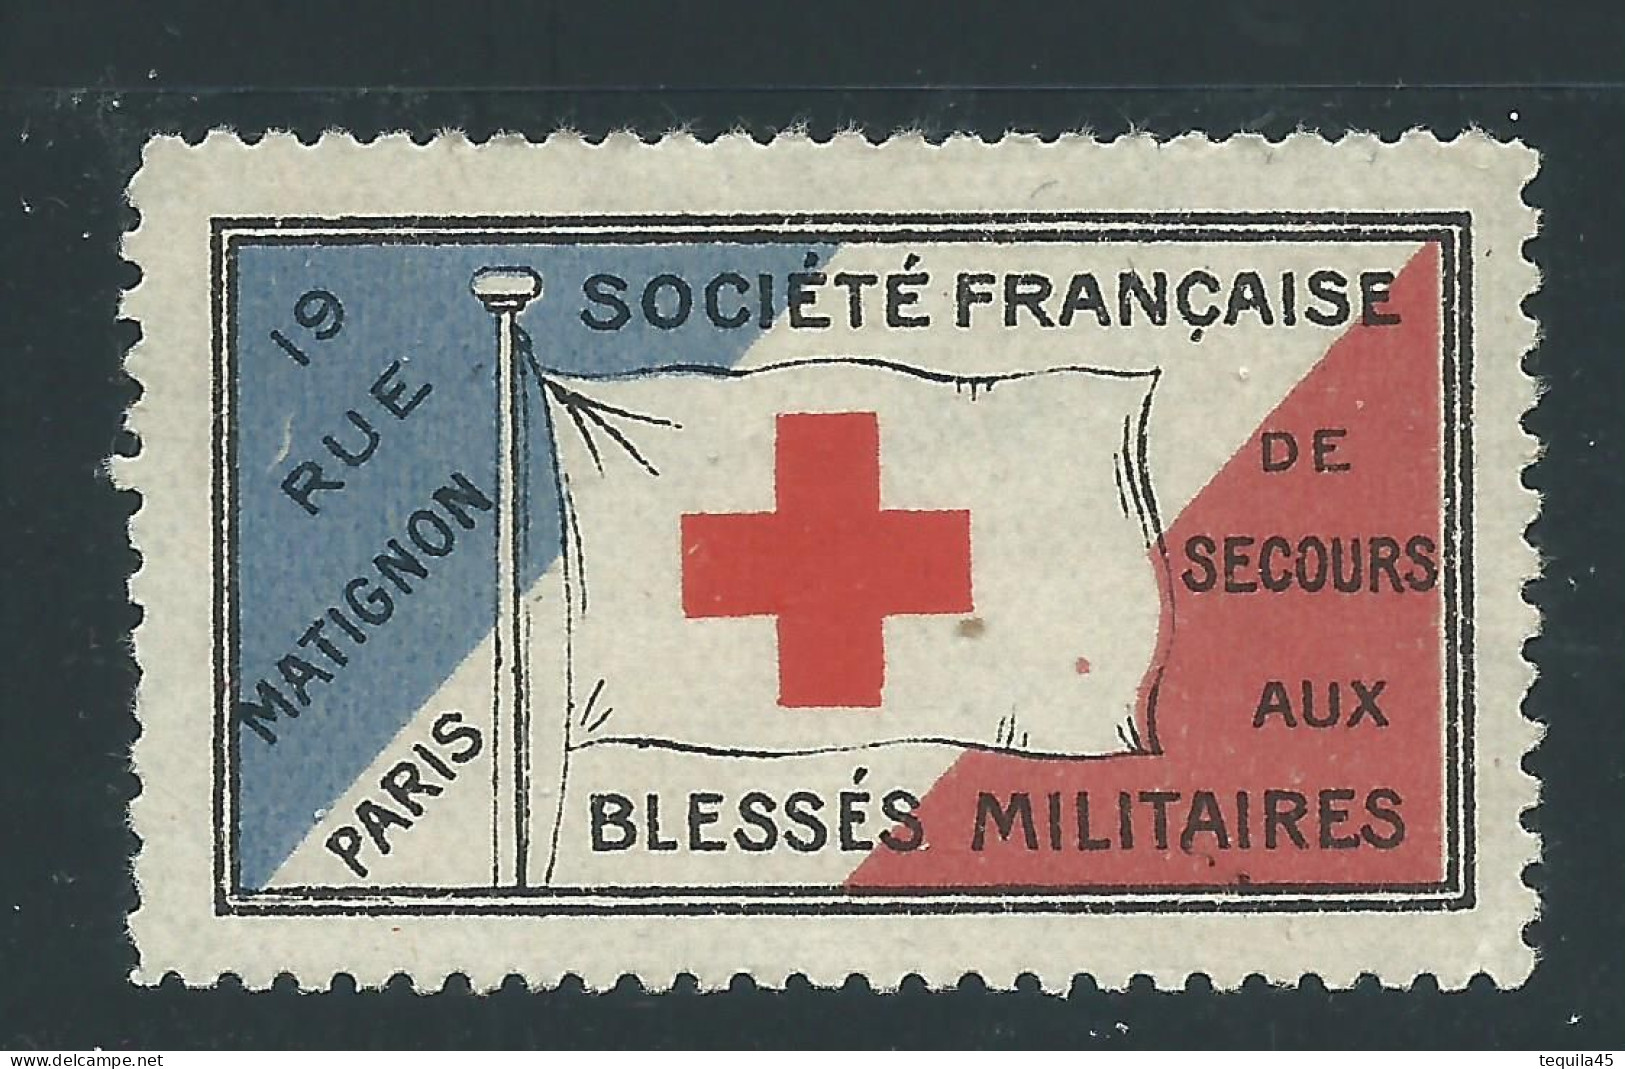 VIGNETTE DELANDRE - Secours Blessés Militaires - France - WWI WW1 Cinderella Poster Stamp Grande Guerre 1914 1918 - Red Cross